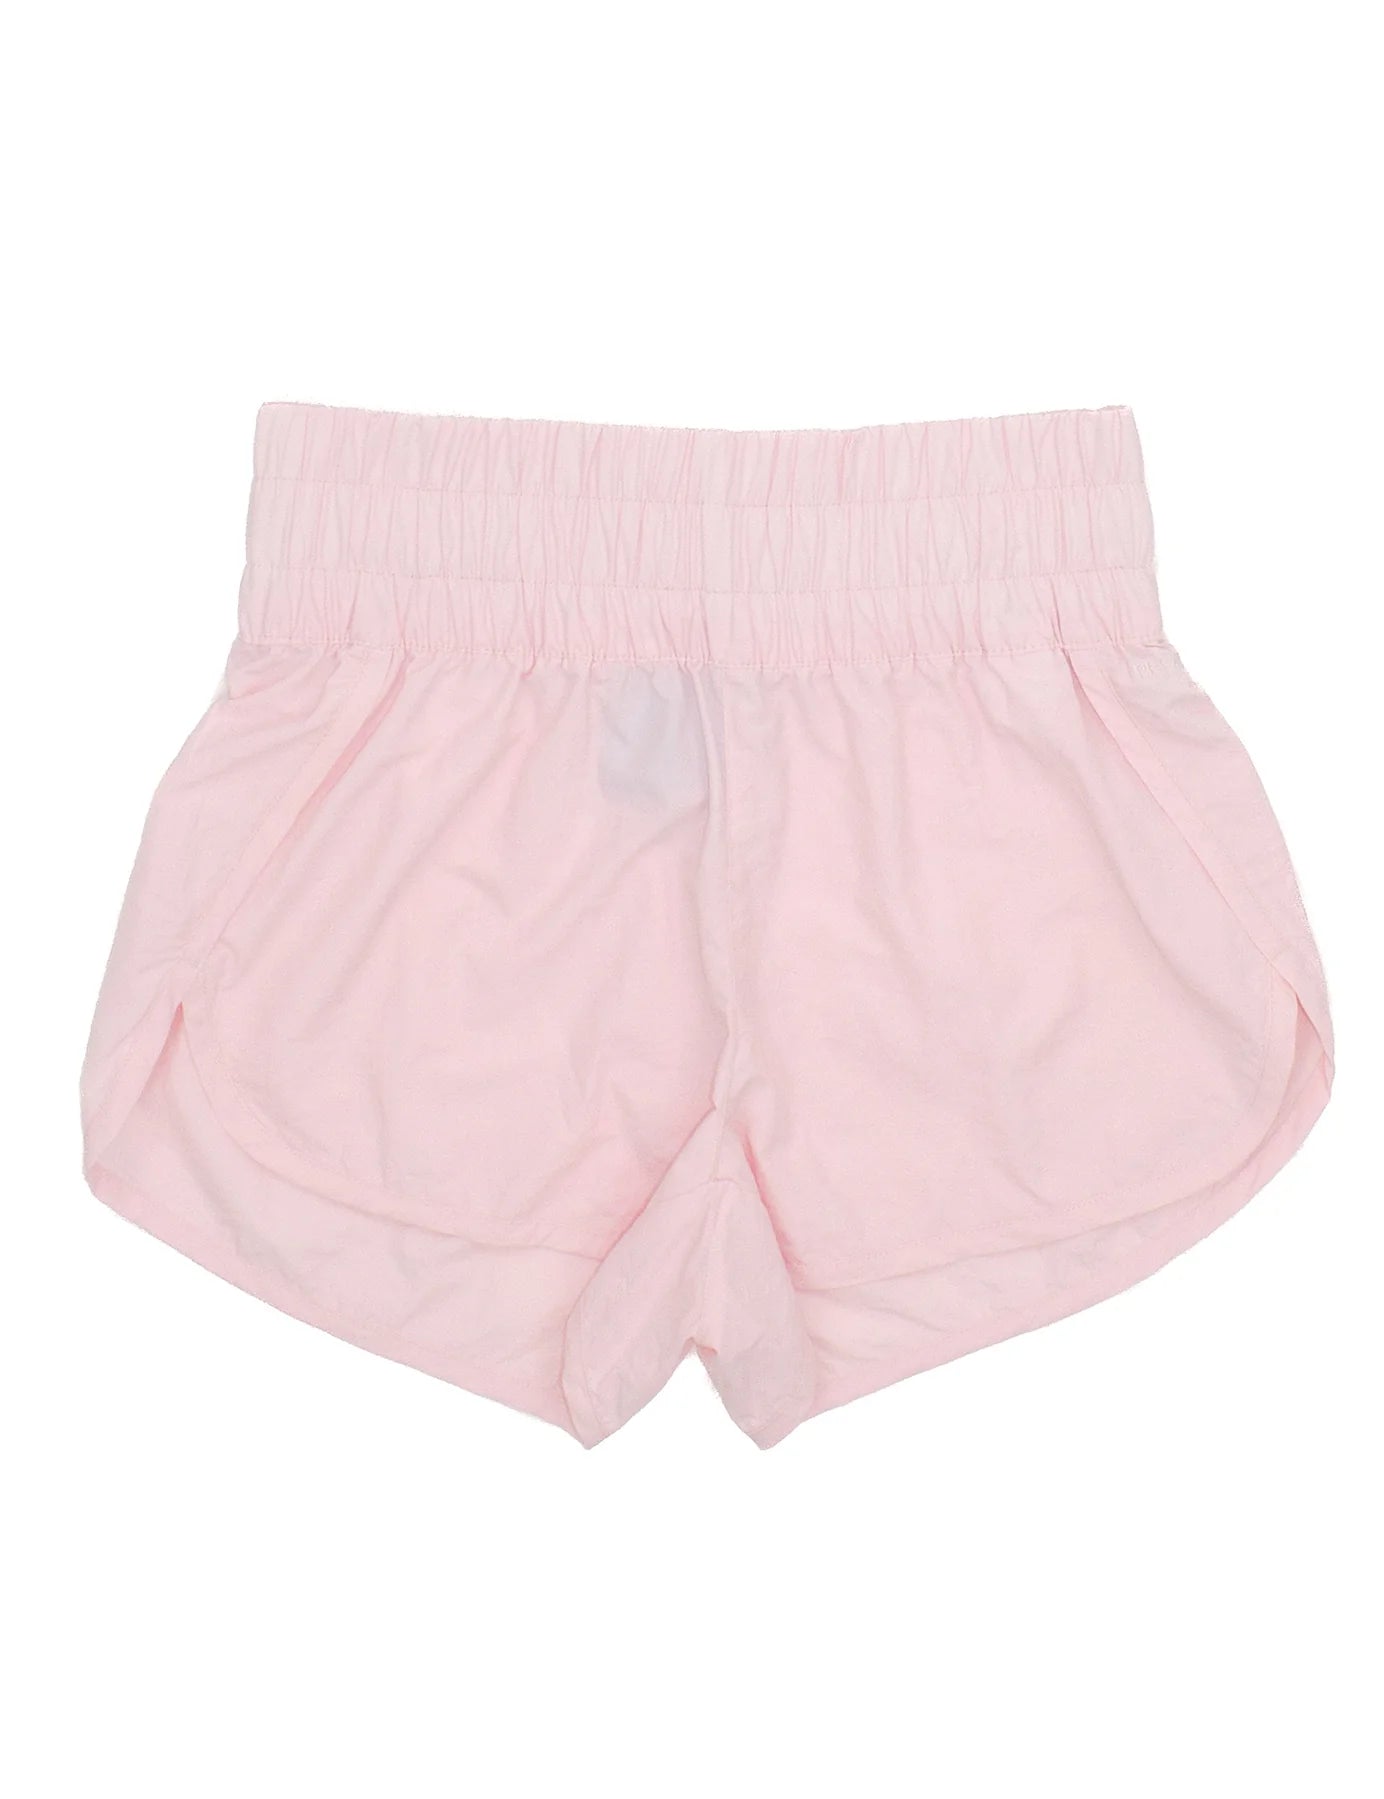 Girls Solis Short - Light Pink - Breckenridge Baby